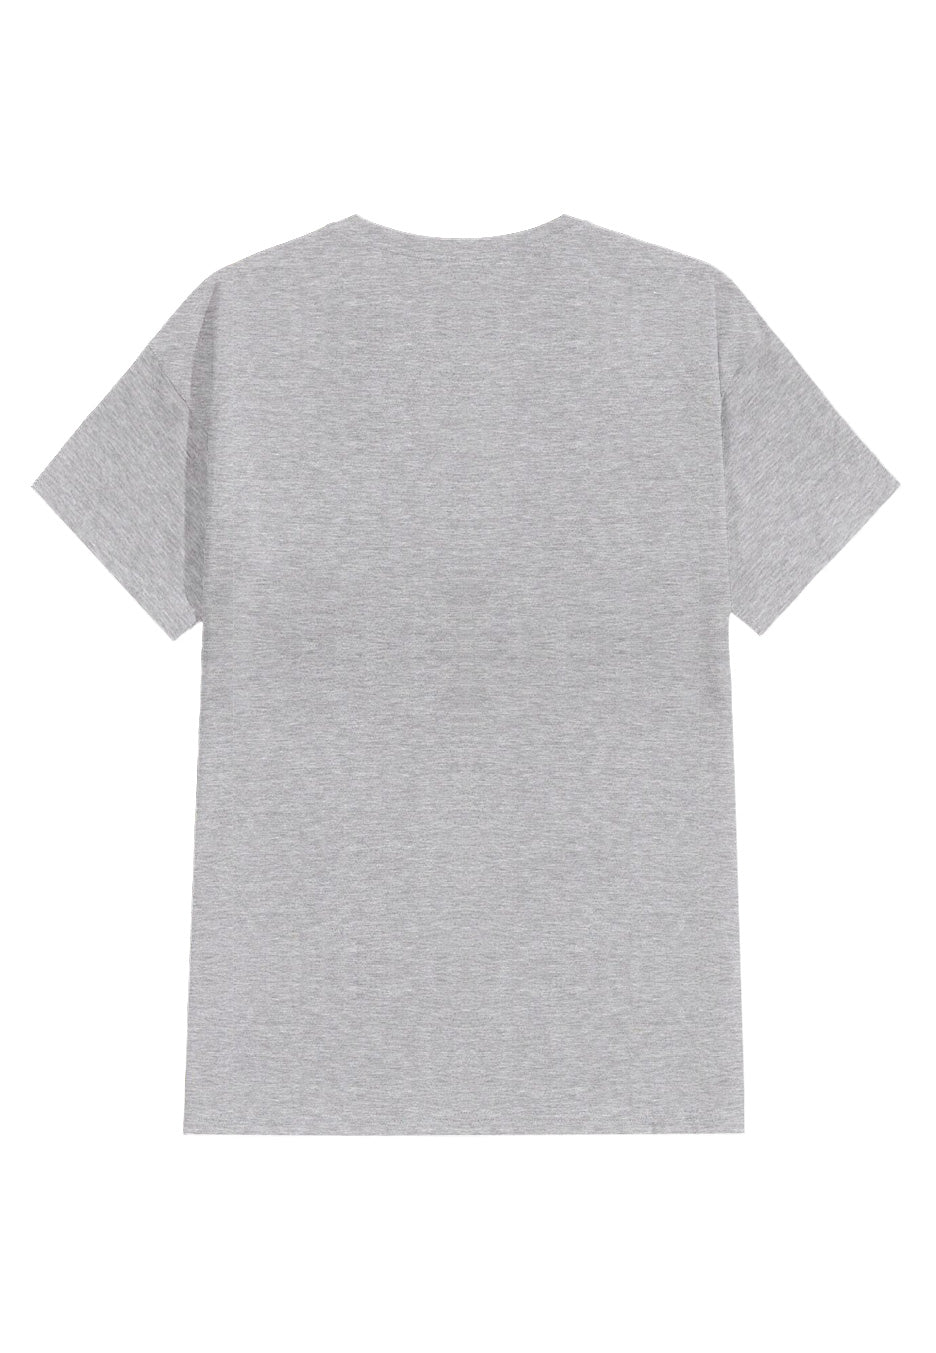 Nirvana - Repeat Grey - T-Shirt